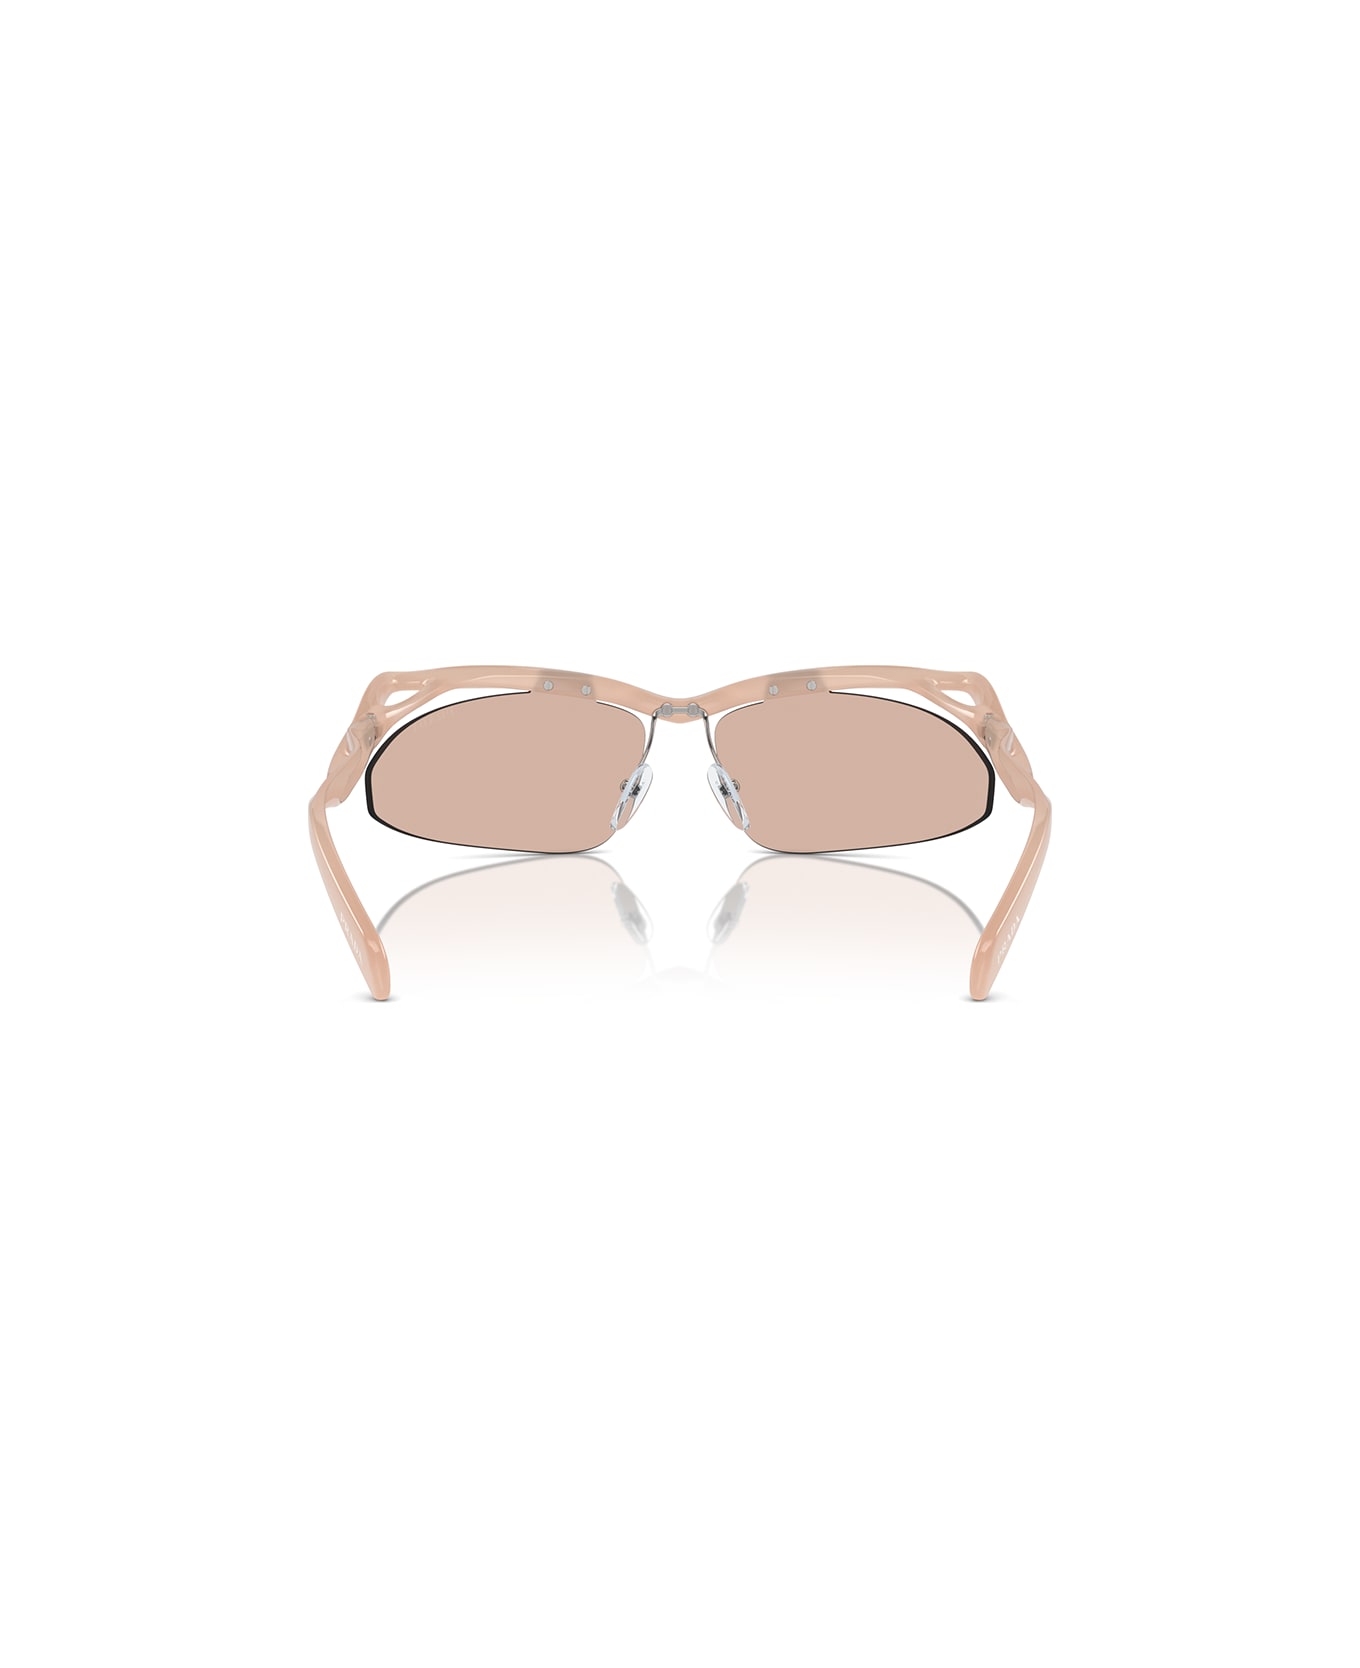 Prada Eyewear Sunglasses - Rosa/Marrone